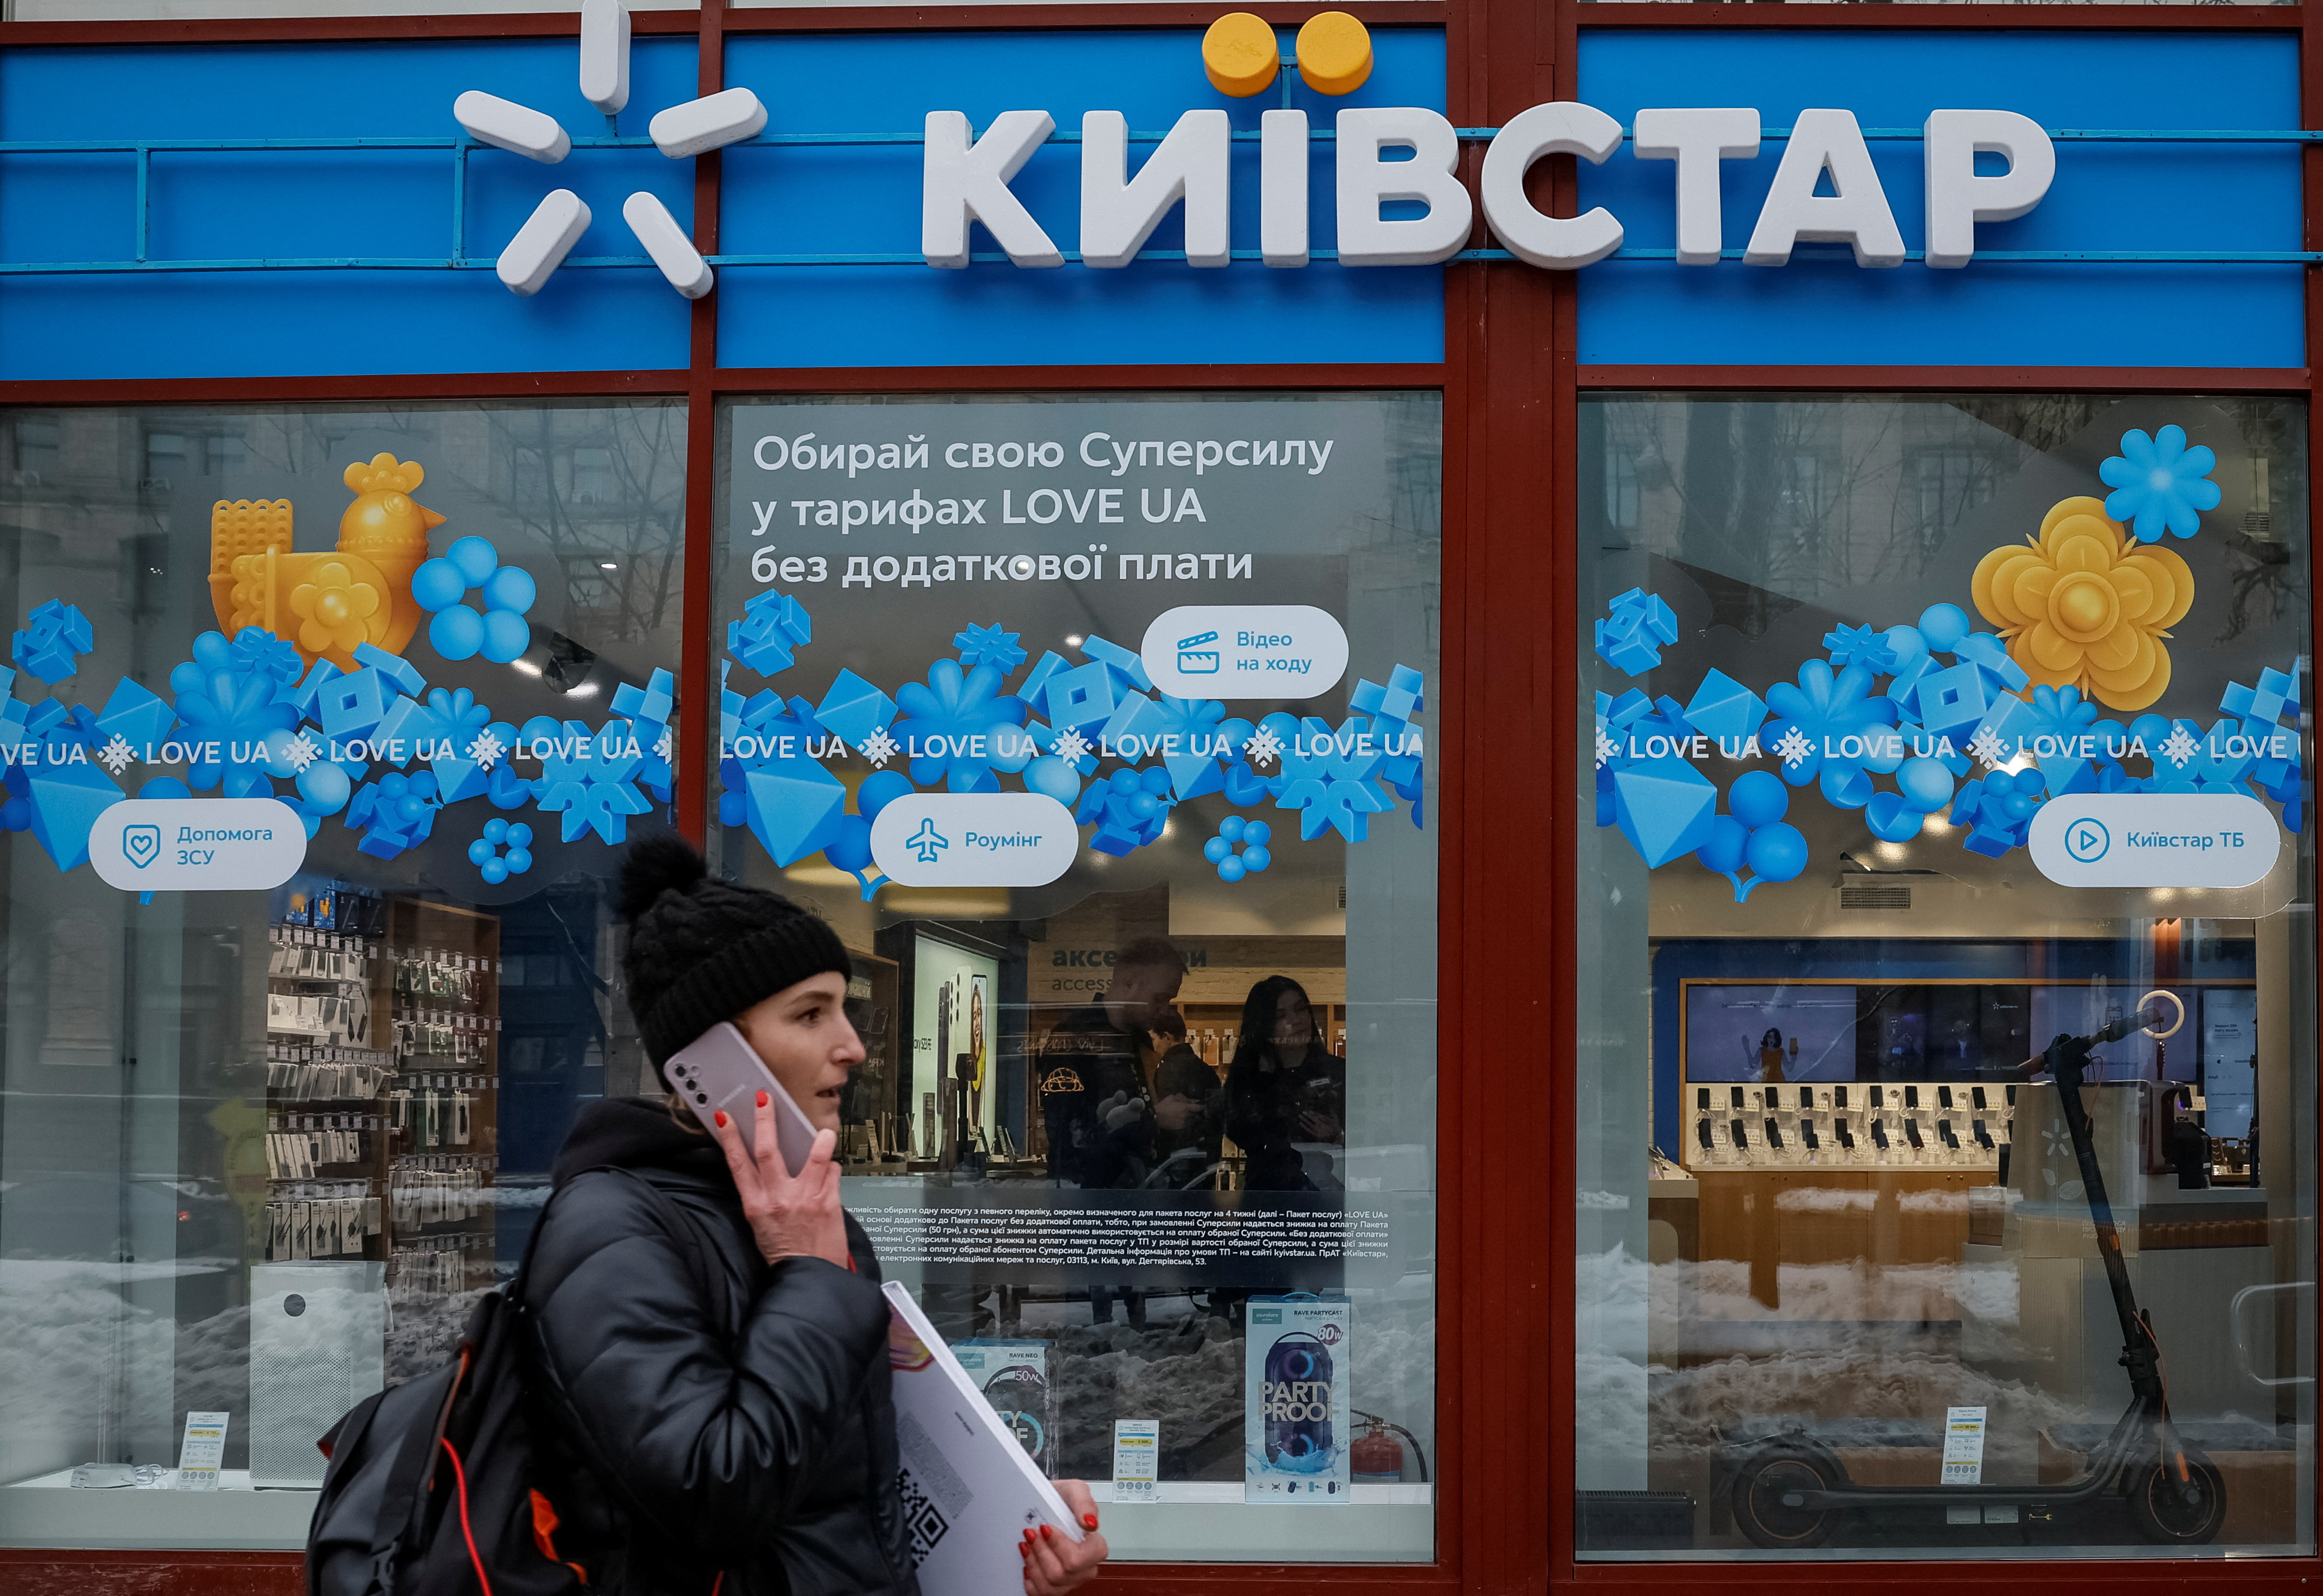 Woman walks past a Kyivstar store in Kyiv